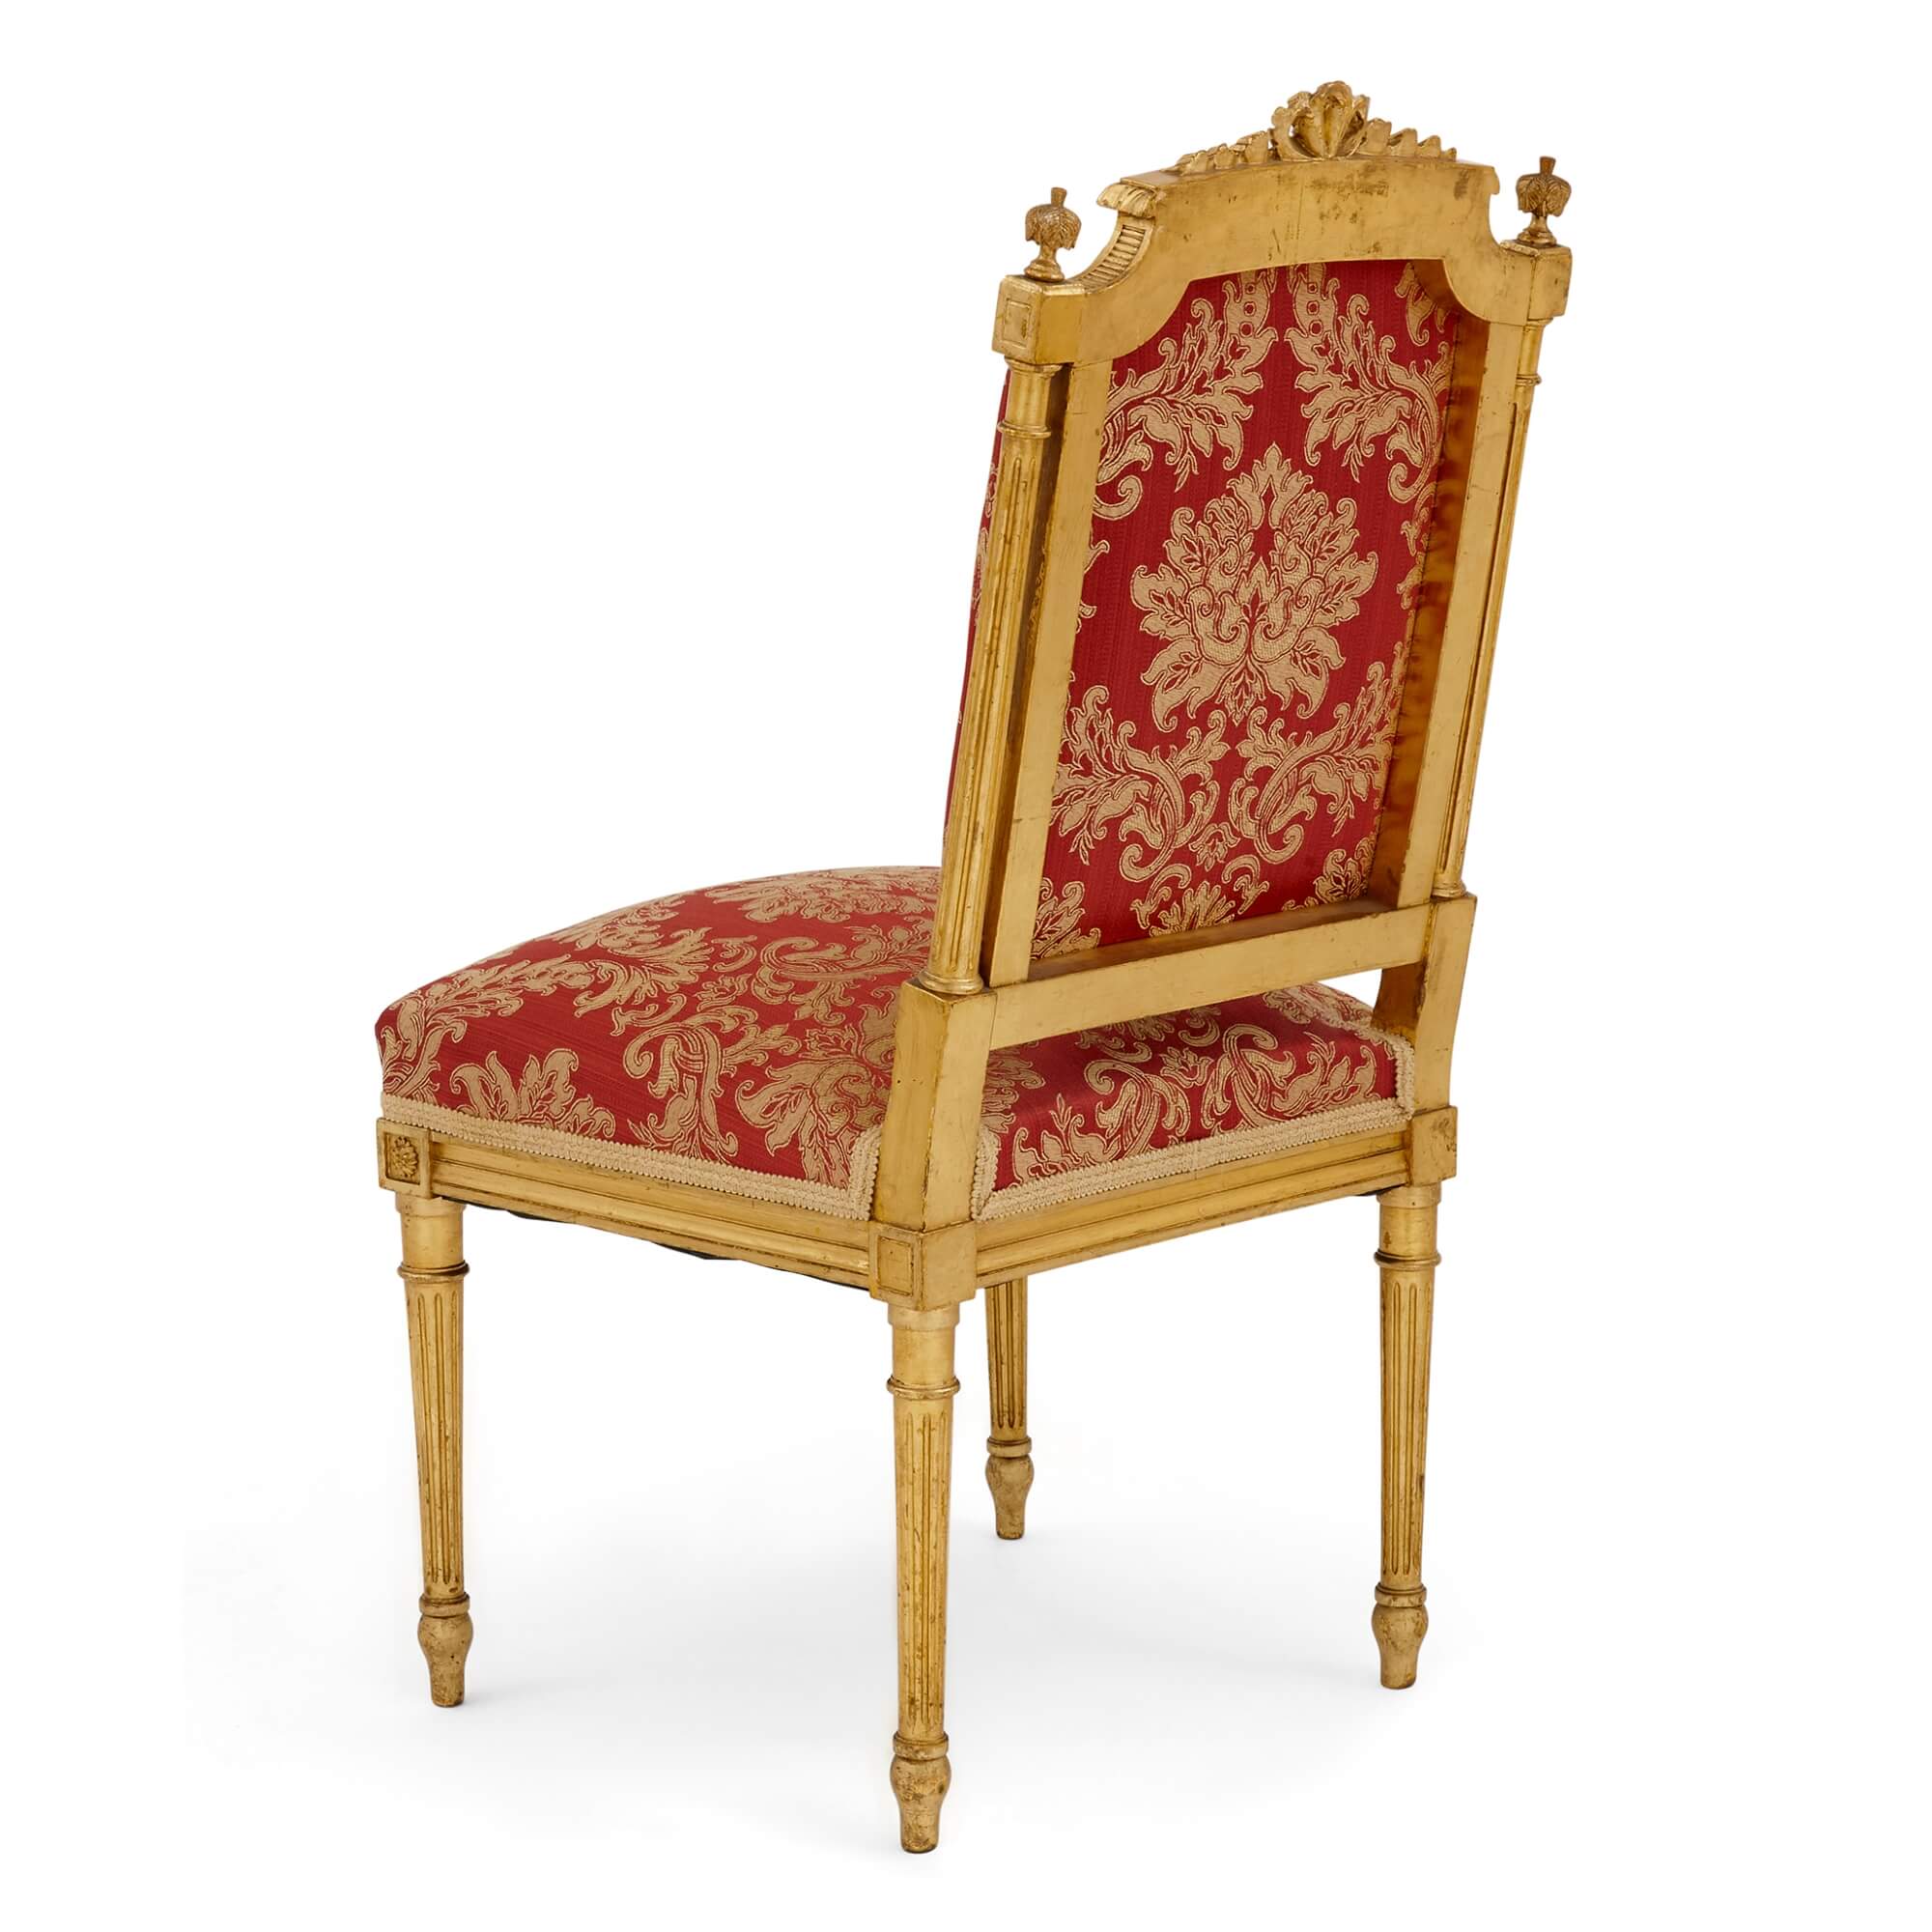 Rare Seven-Piece Louis XIV Style Giltwood Chateau Salon Suite from